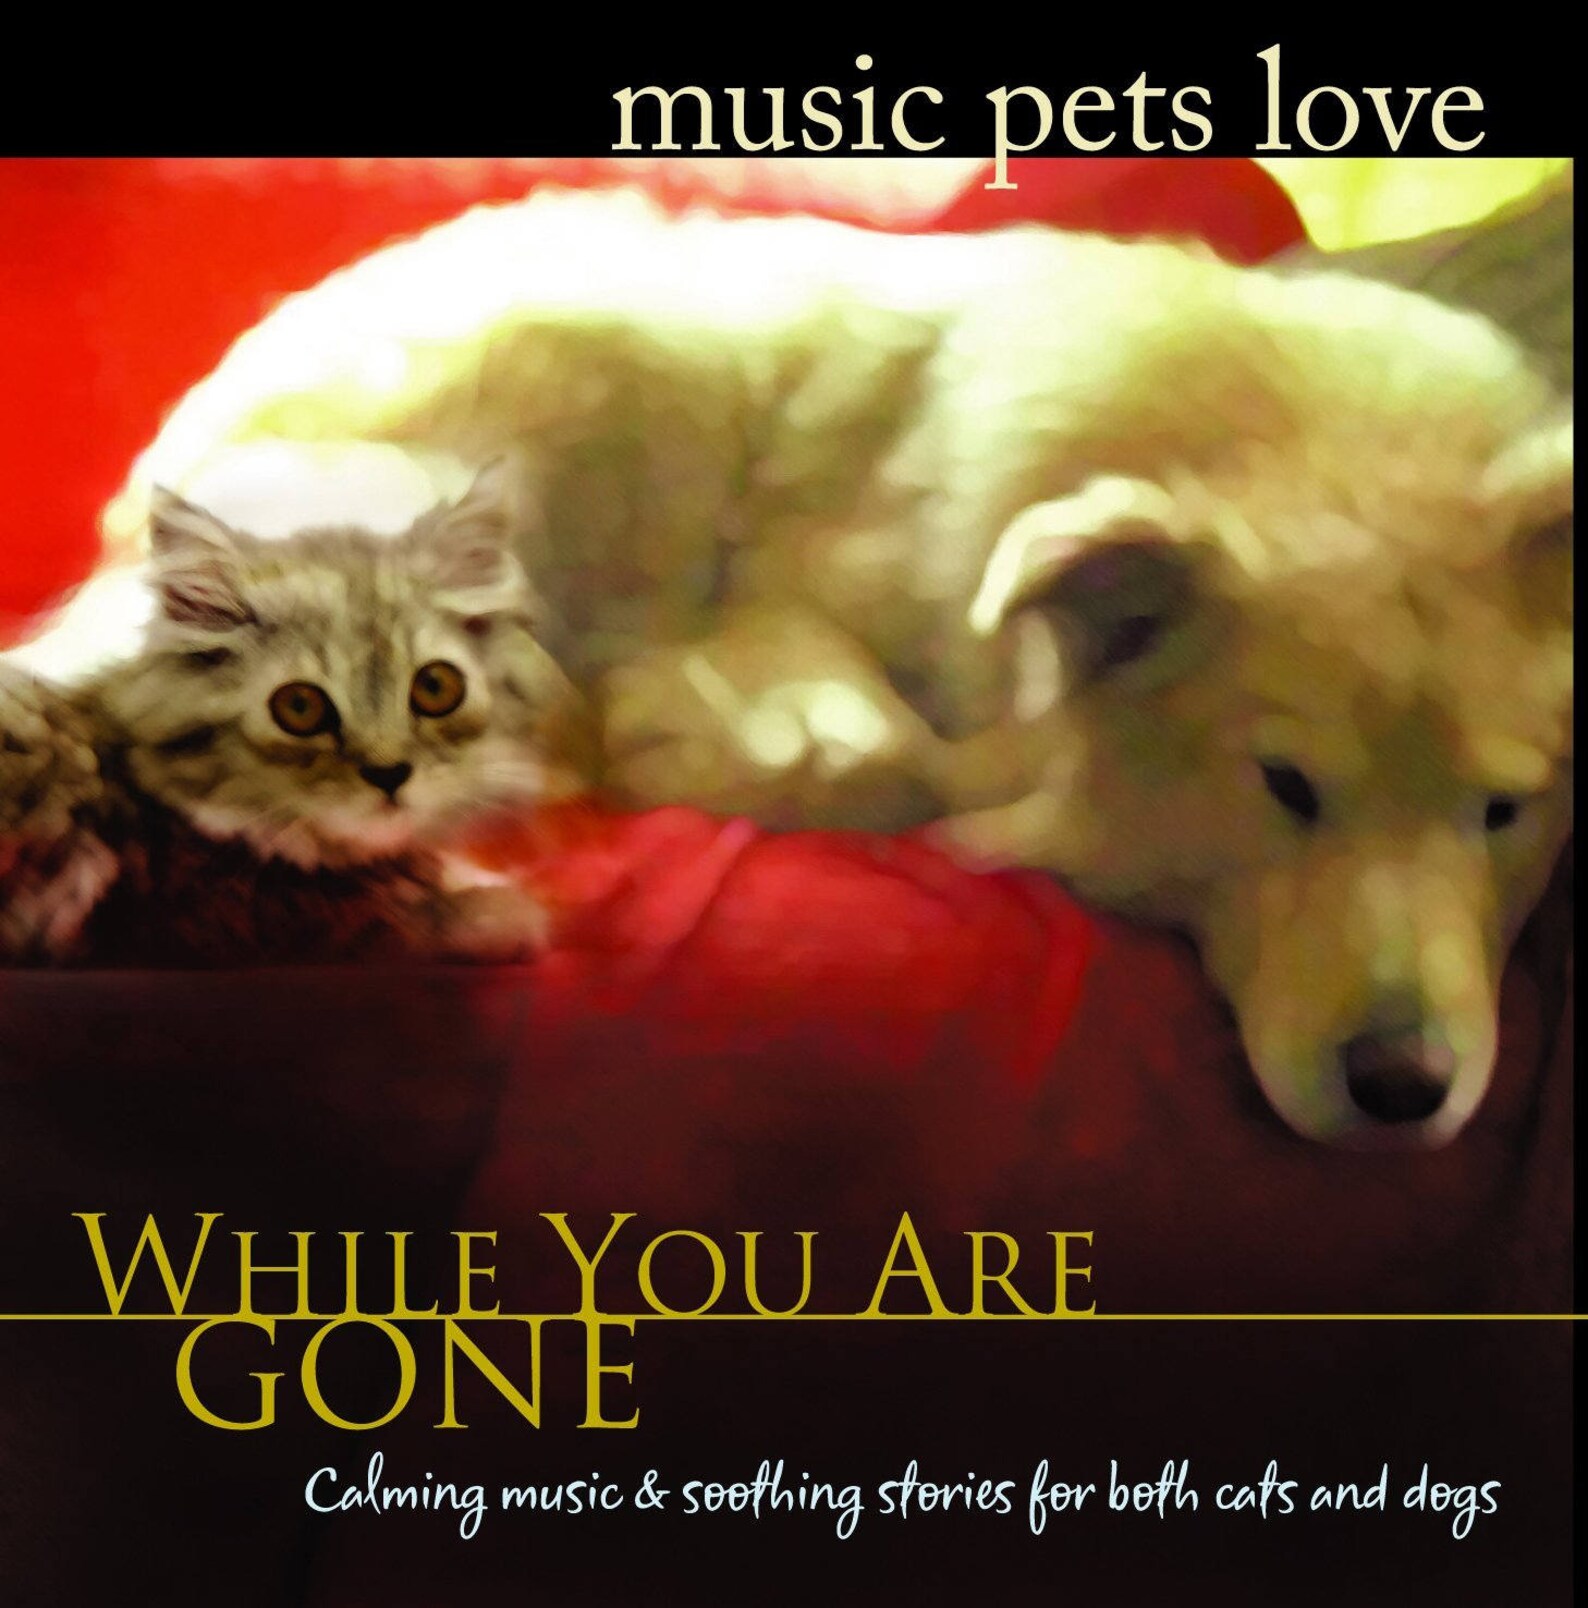 Pets музыка. Music Pets. Pet песня. Pets offer Unconditional Love. Rock musicians with Pets.